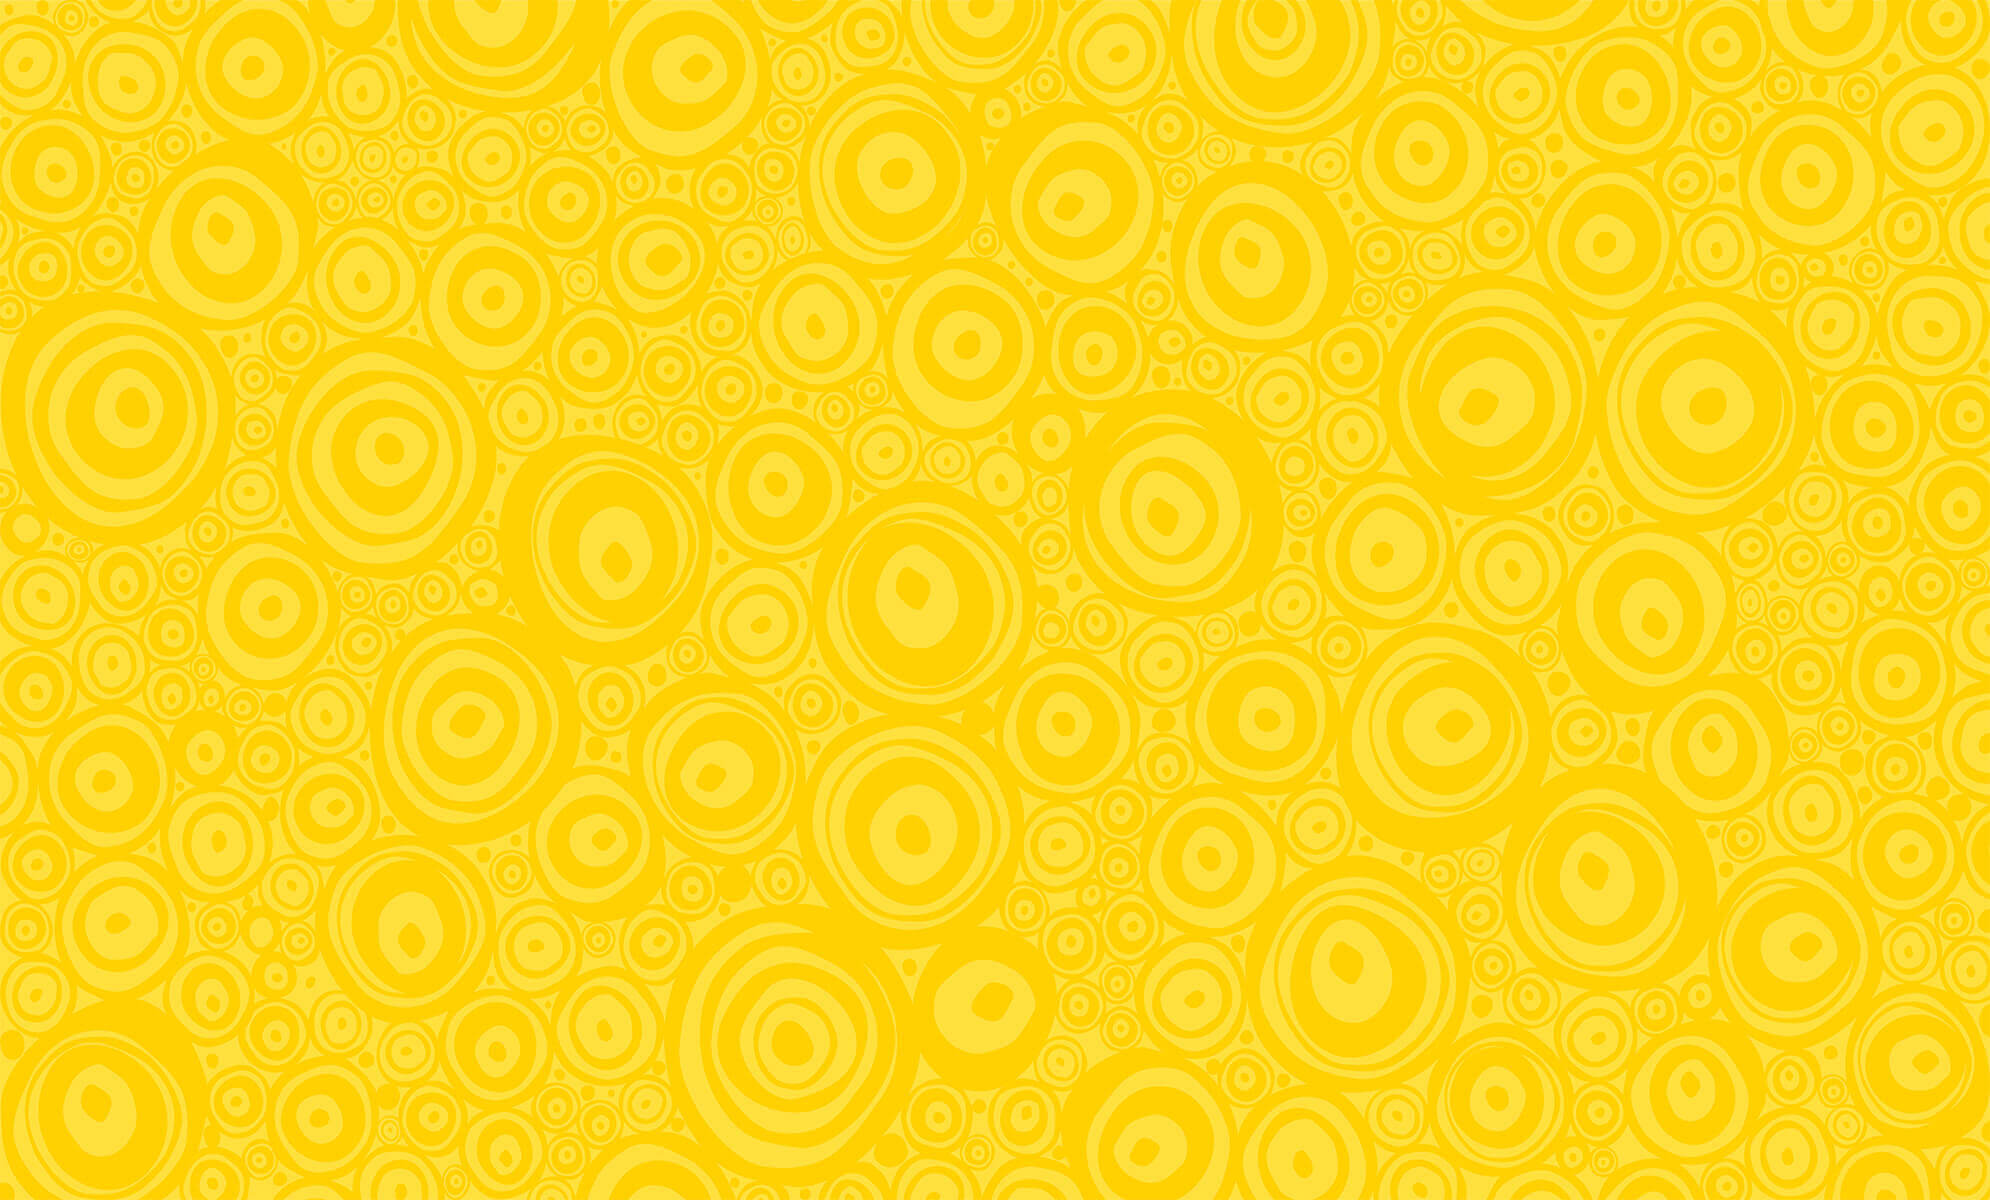 Background circles - yellow